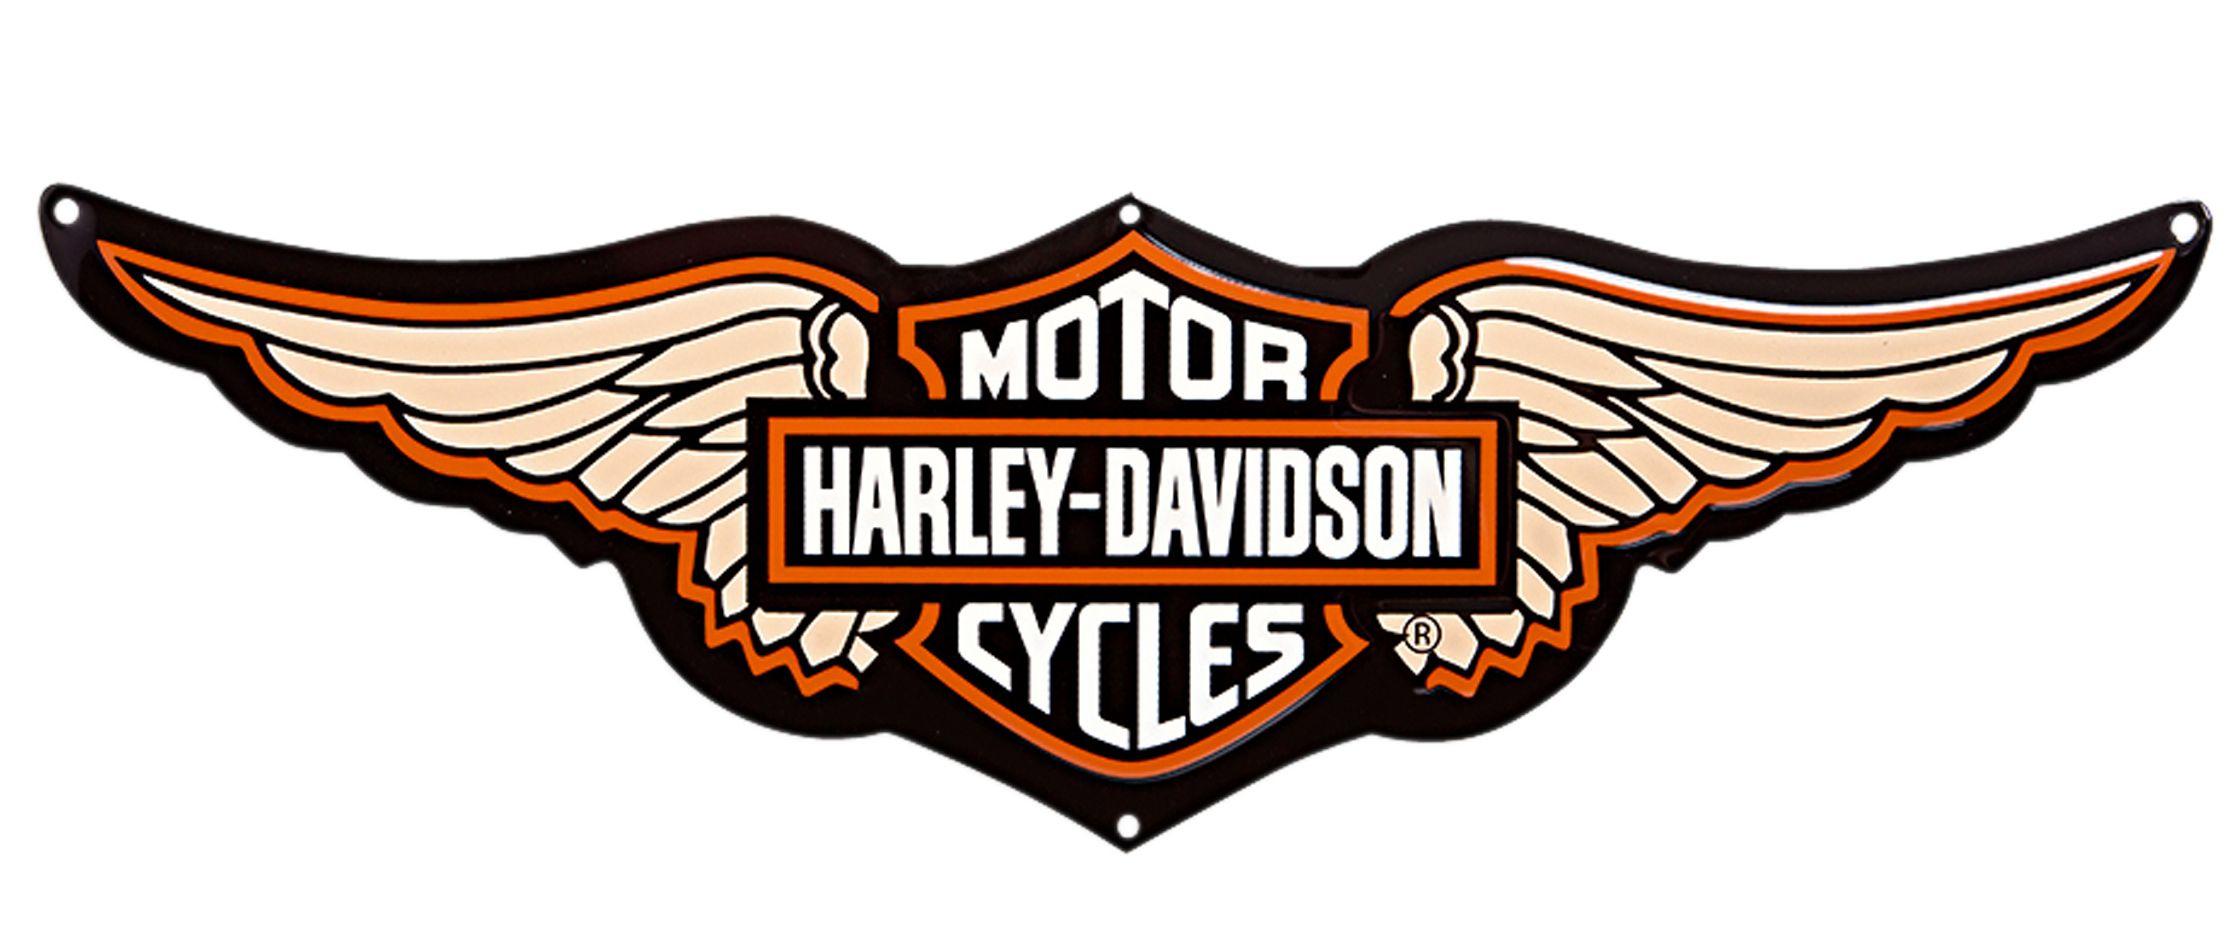 Harley Davidson's Iconic Logo Rich In Symbolism